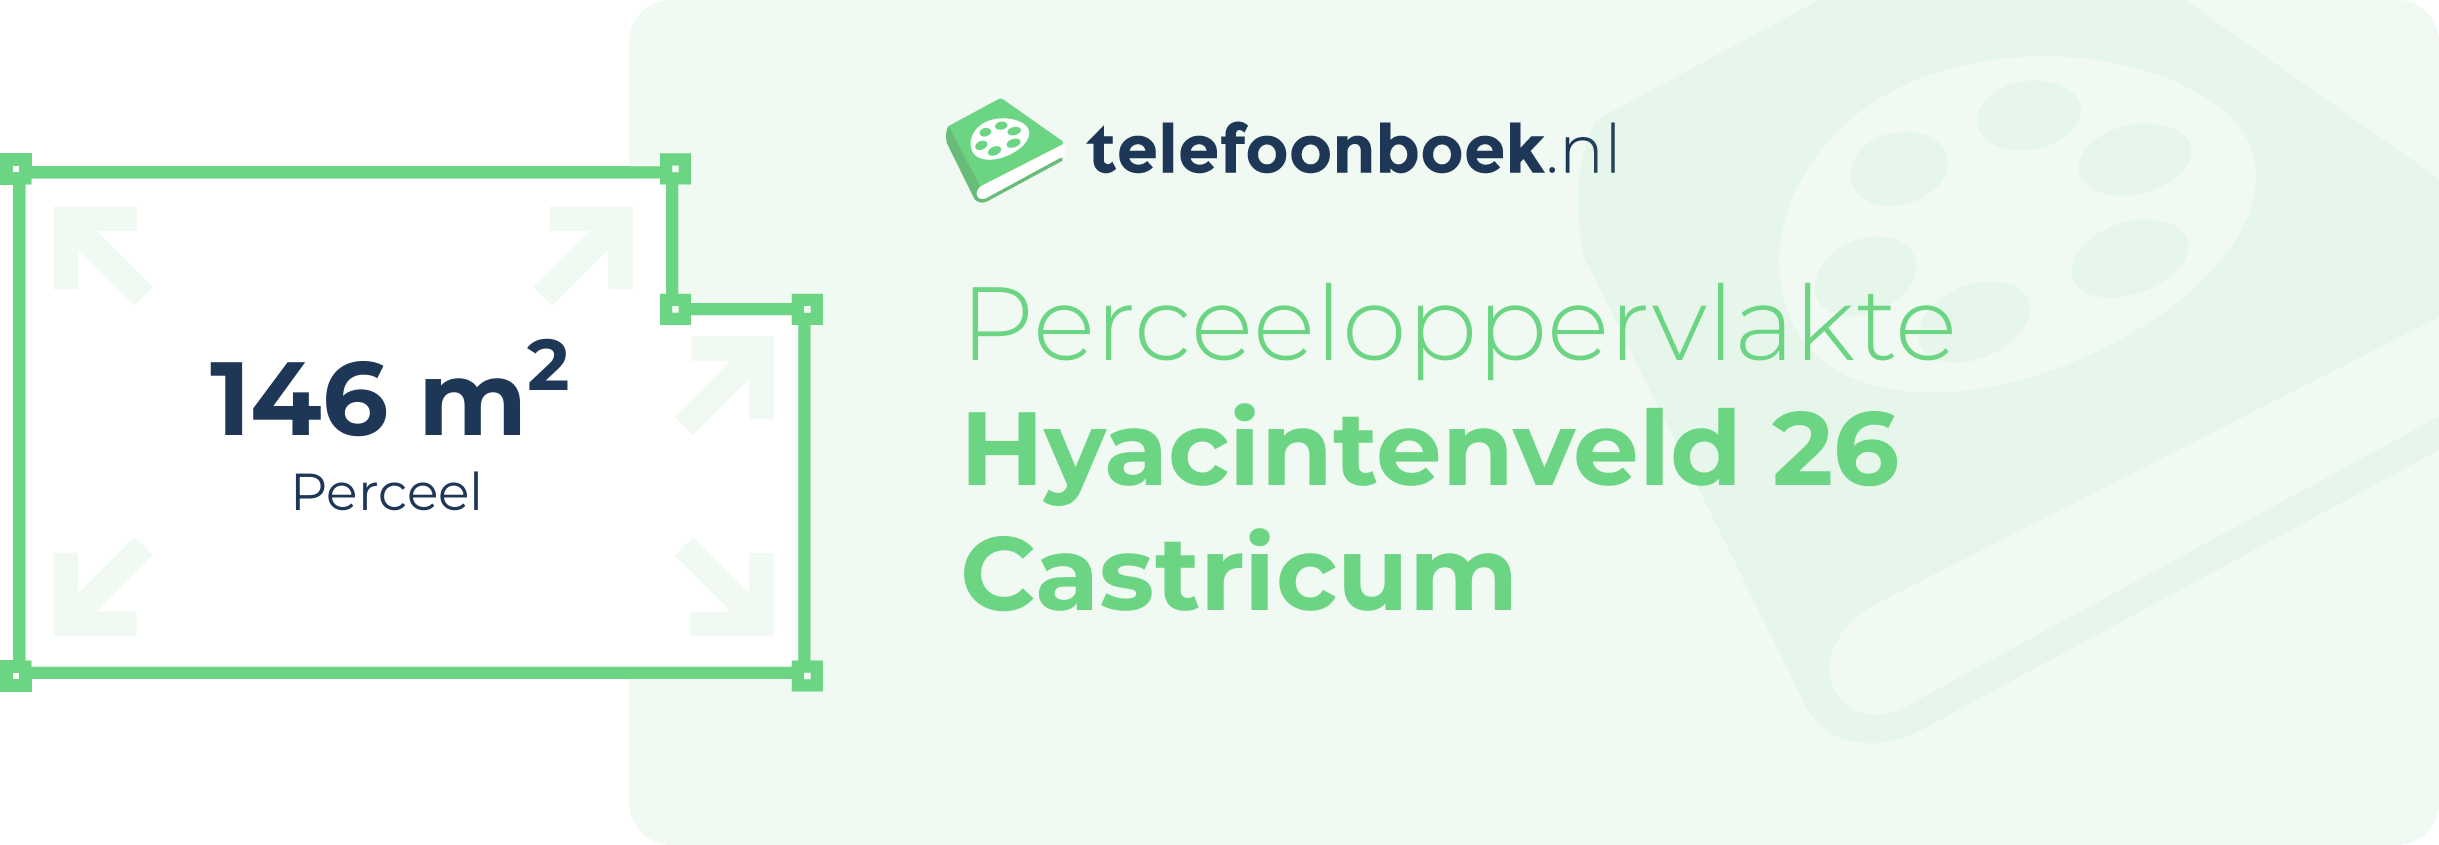 Perceeloppervlakte Hyacintenveld 26 Castricum